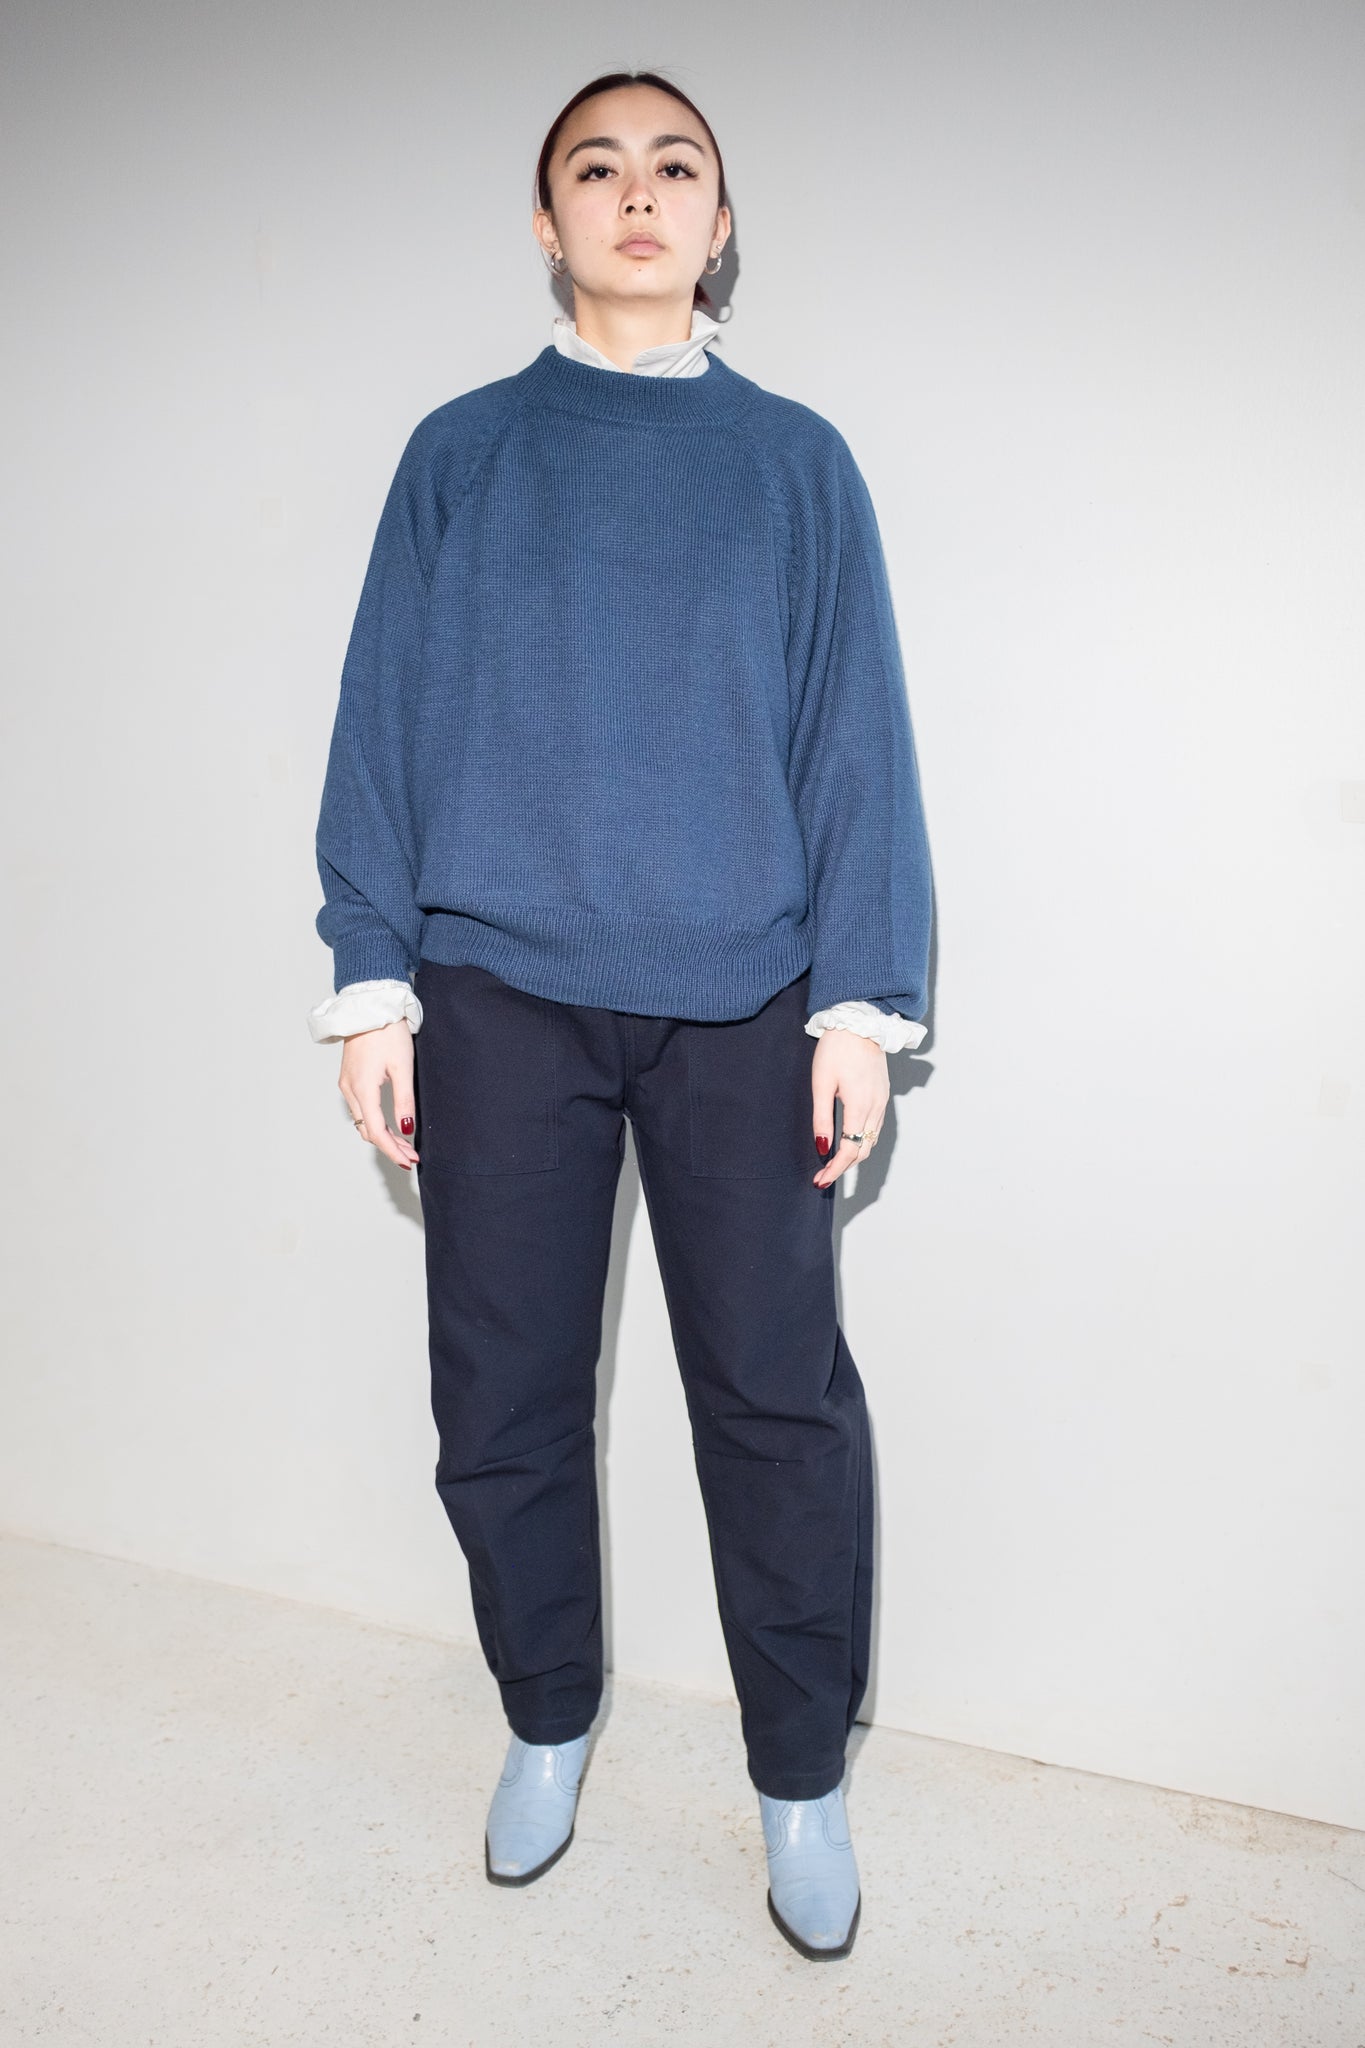 Brynn Knit Sweater in Denim Blue